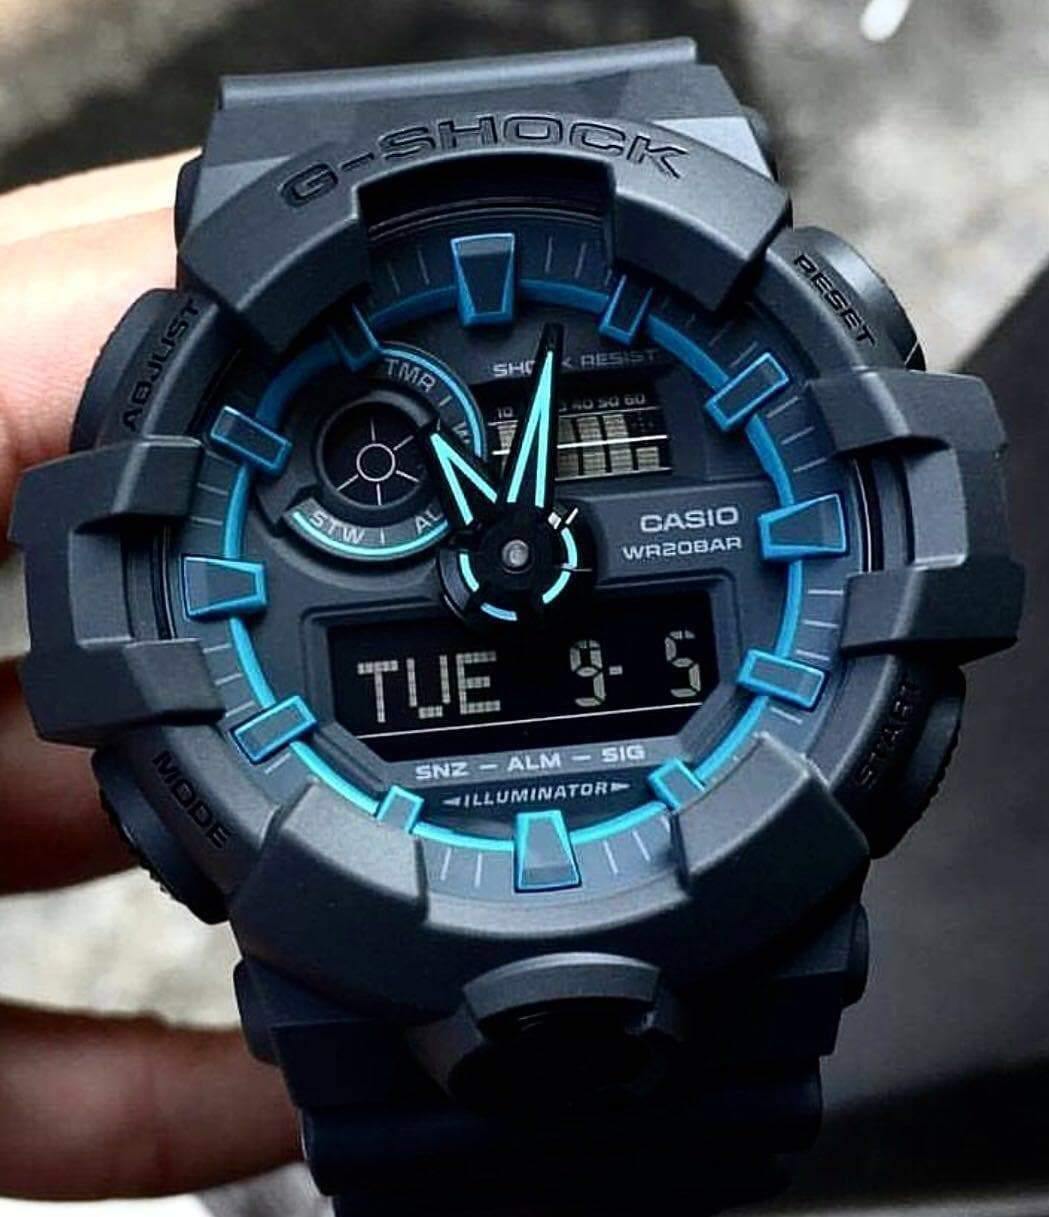 Casio G-Shock Special Color Model Black x Neon Blue Watch Tron GA700SE-1A2DR - Prestige